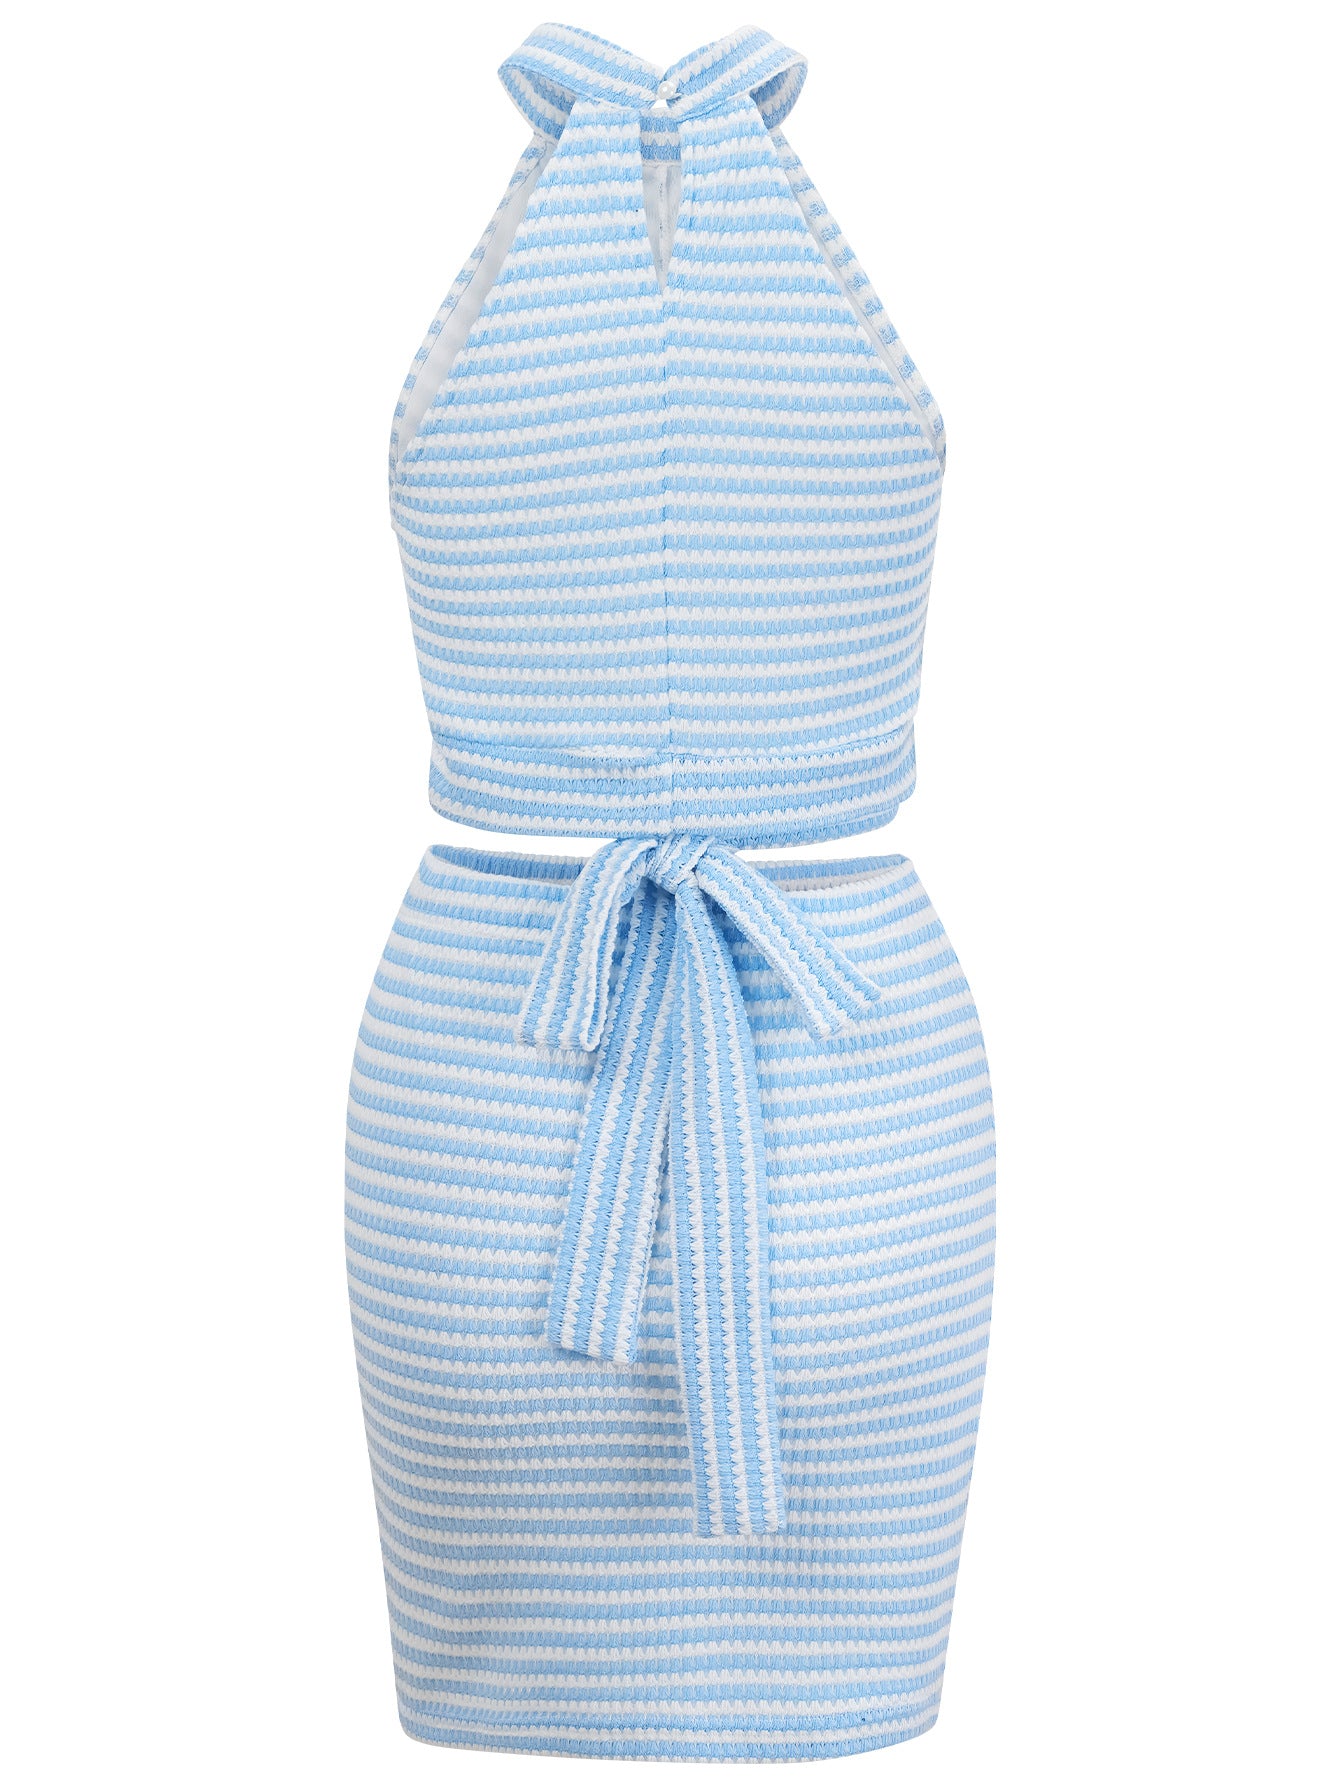 Skirt Set- Striped Summer Women's 2 Piece Set - Halter Top & Bowknot Back Mini Skirt- - Chuzko Women Clothing